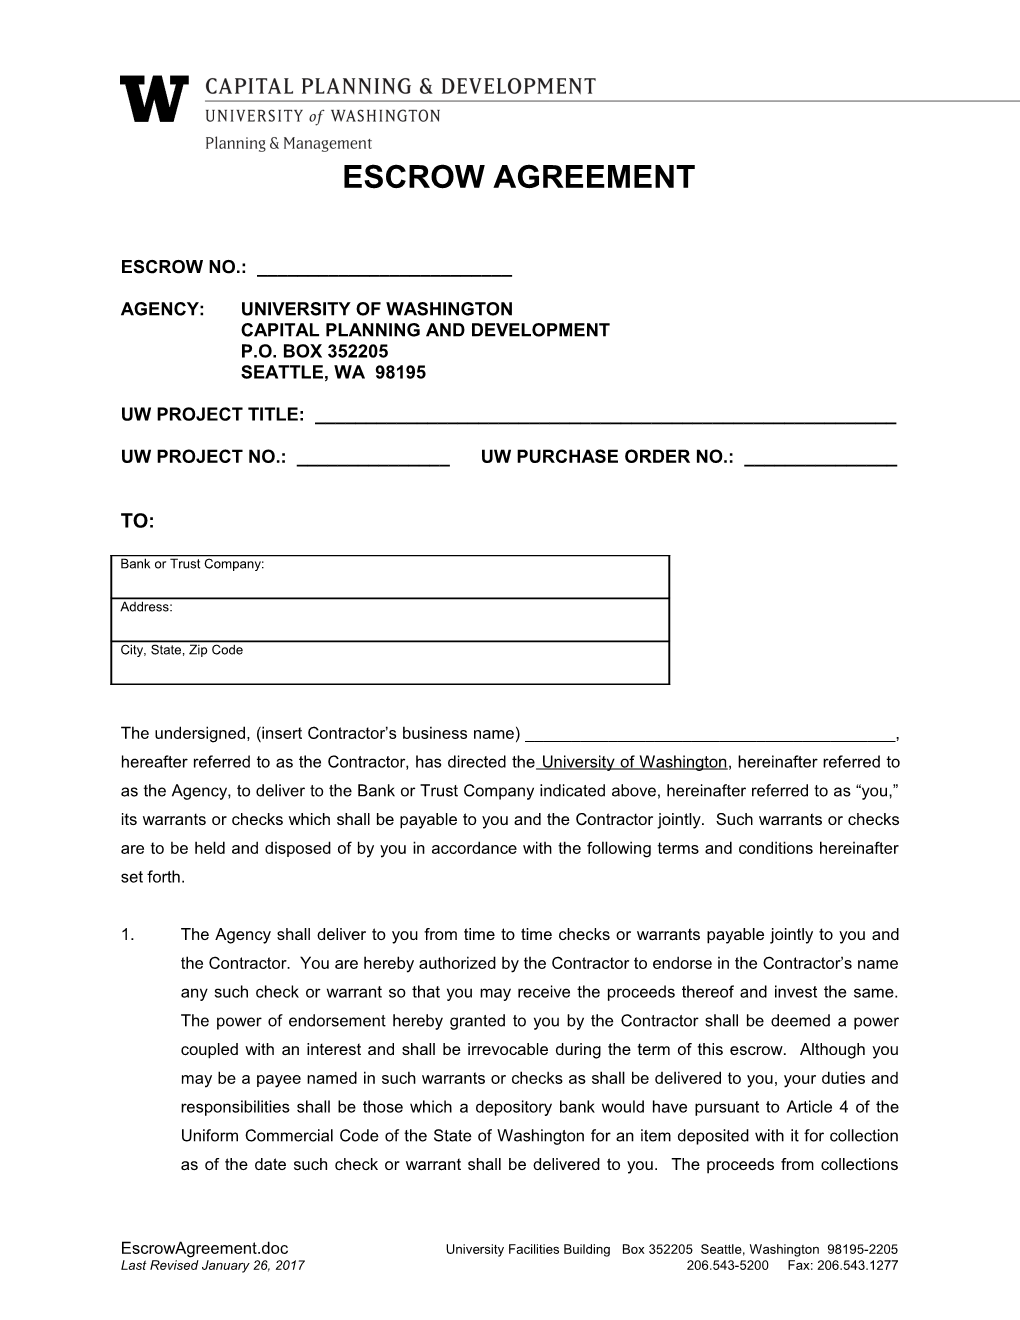 Escrow Agreement University of Washington